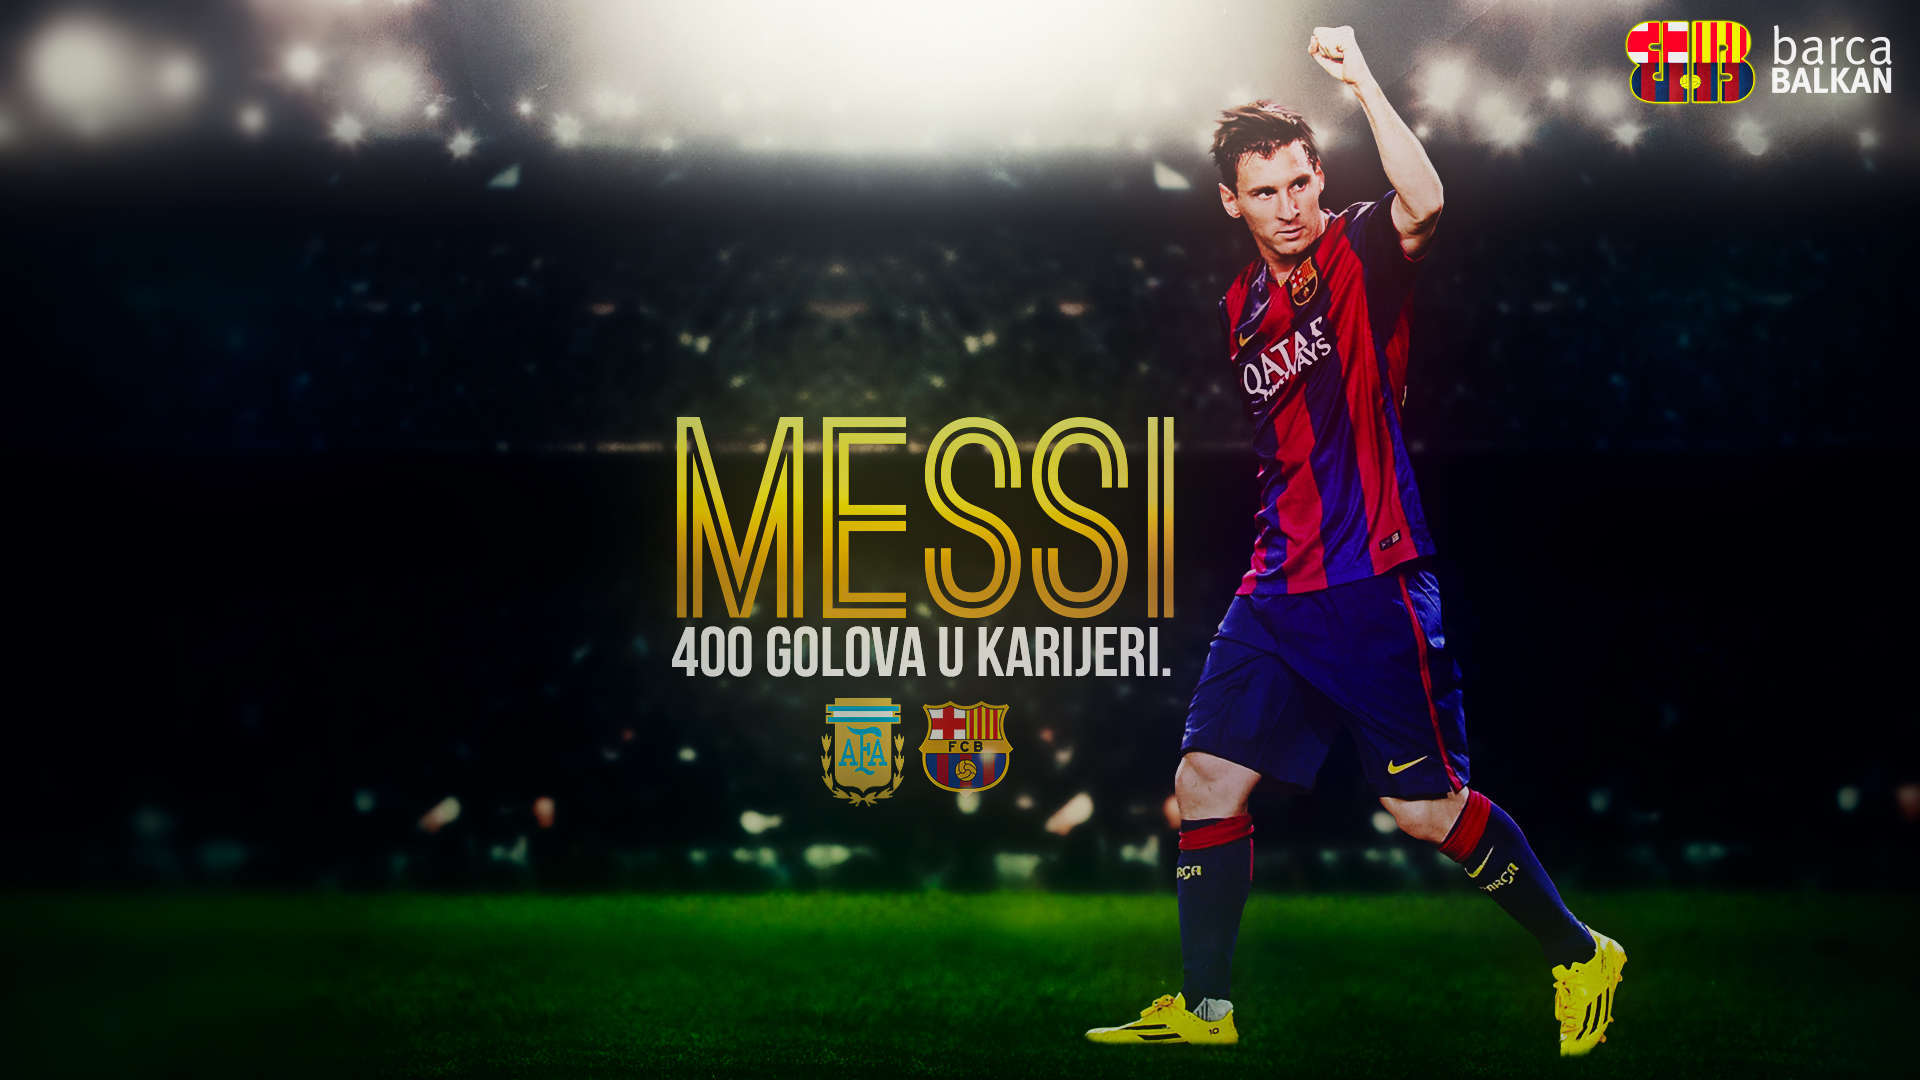 Lionel Messi HD Image Ambwallpaper